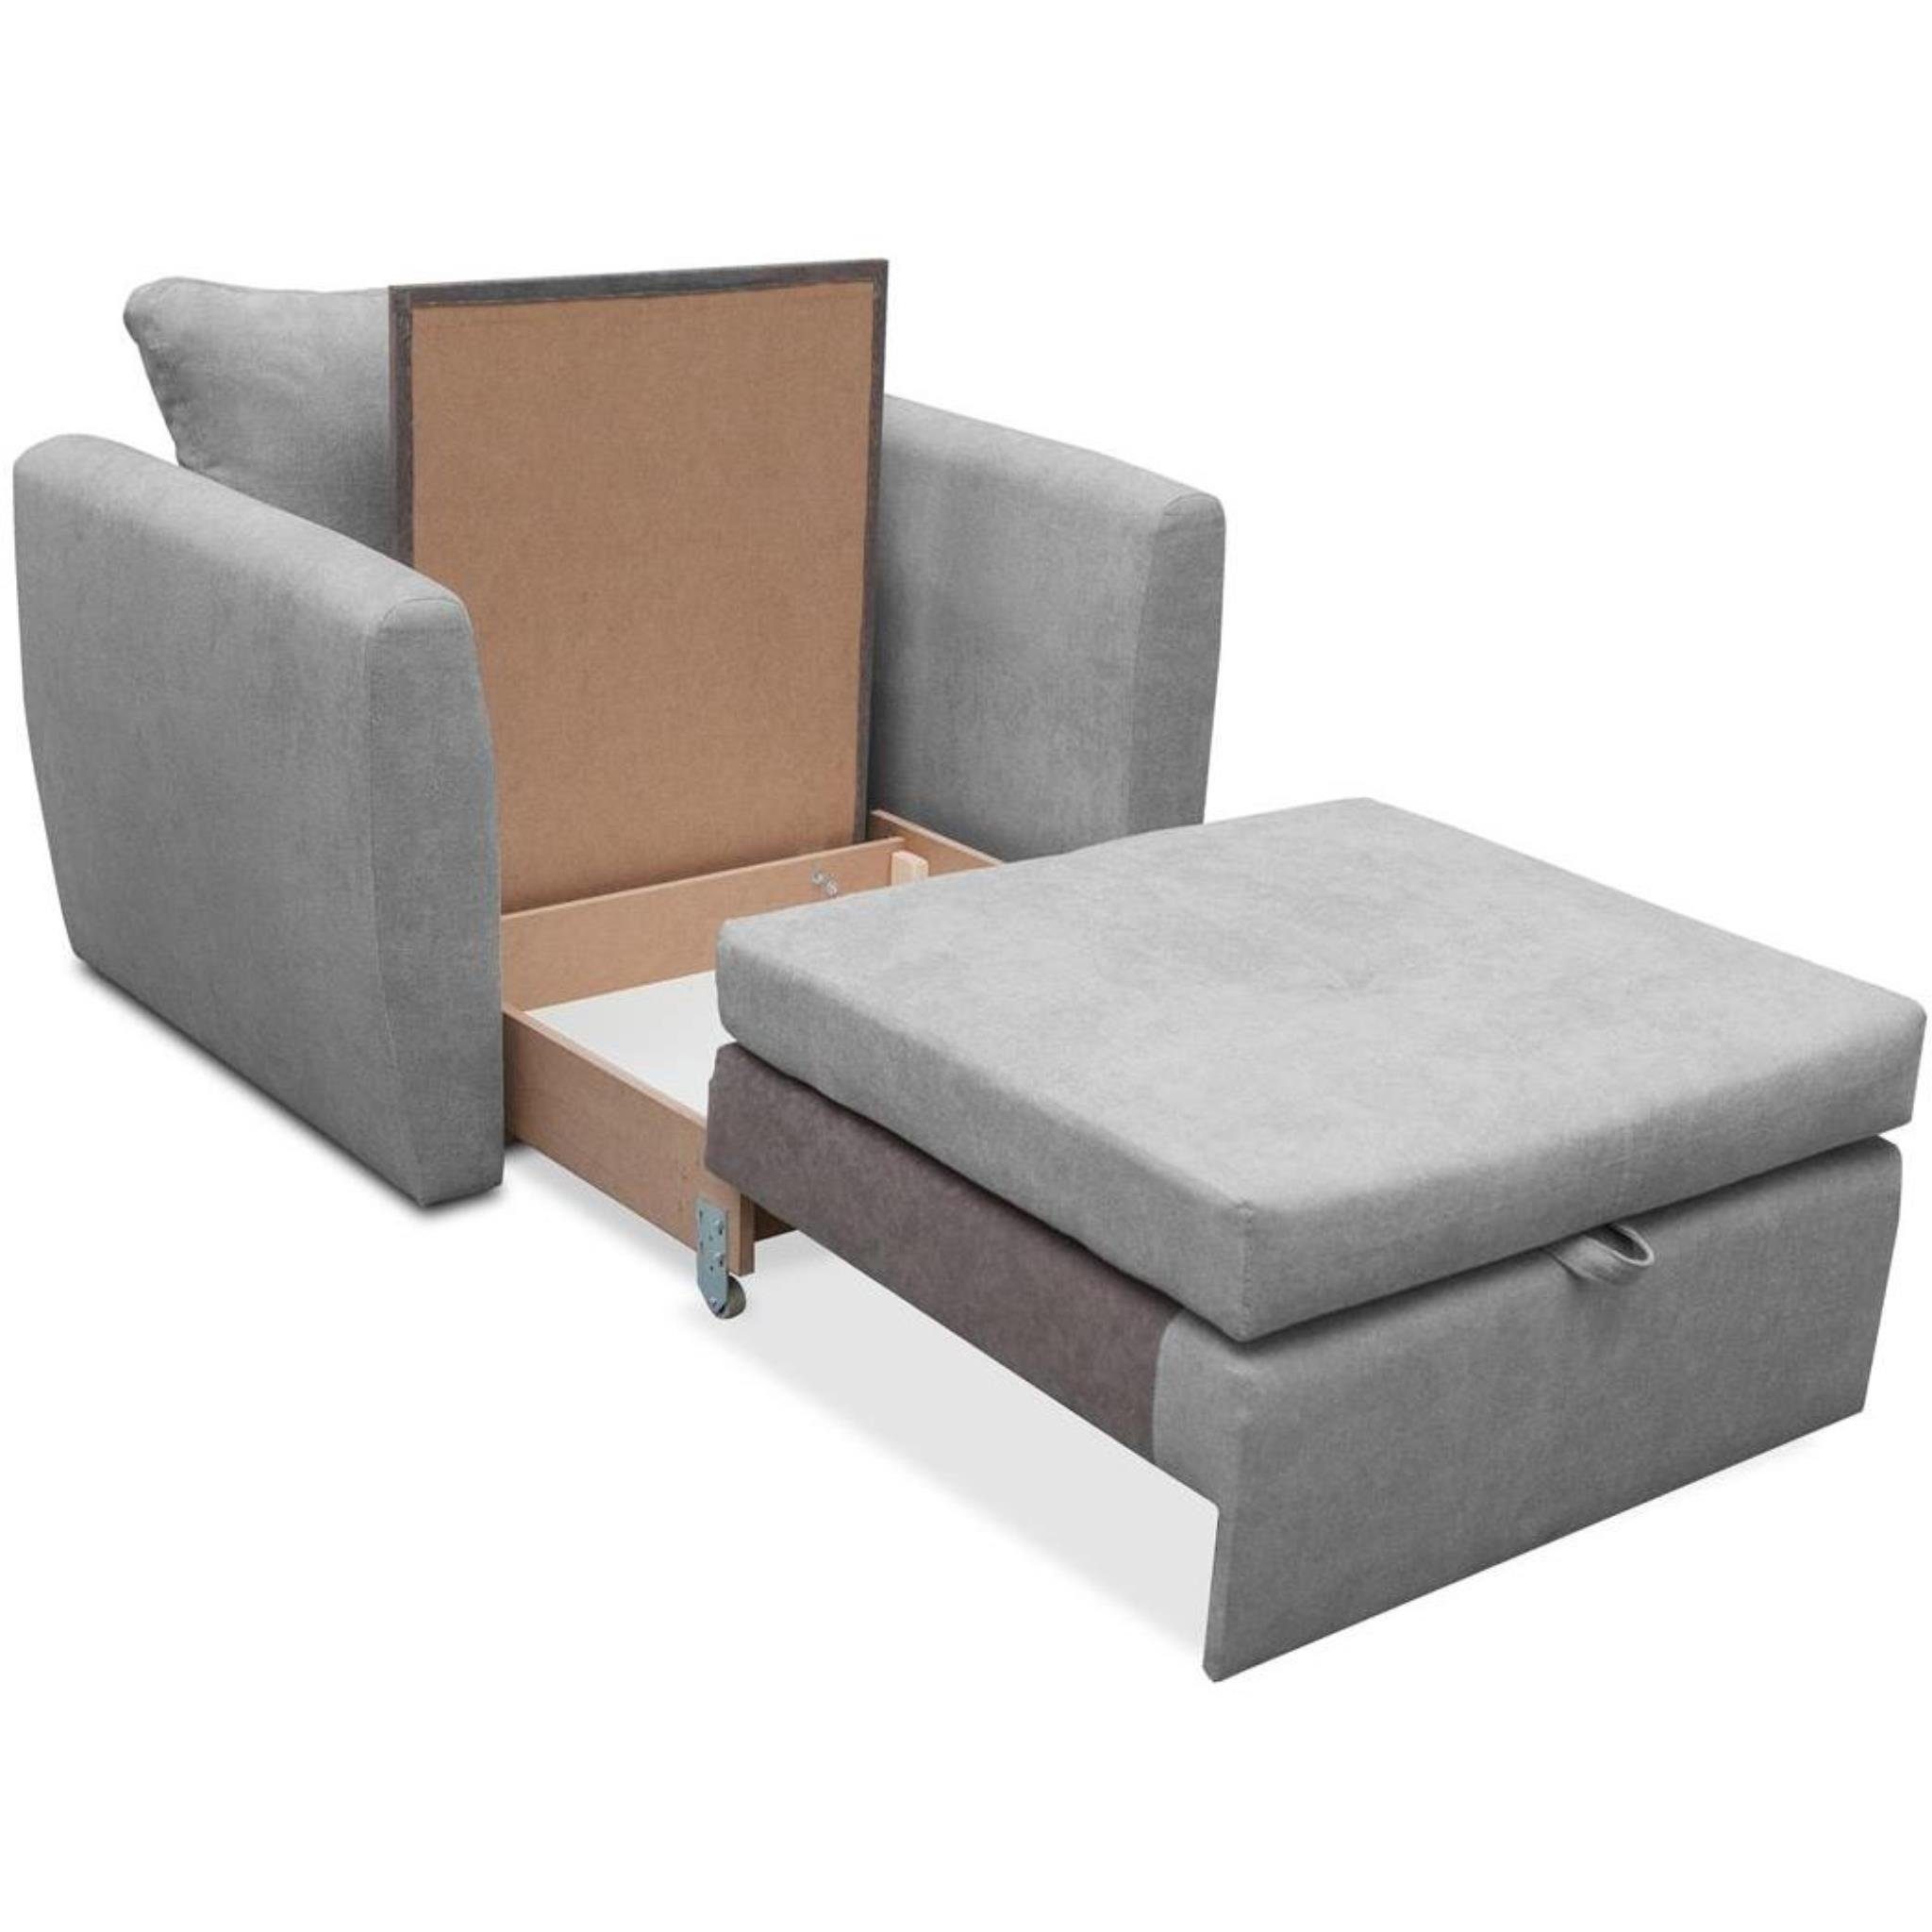 1-Sitzer Polstersessel (Modern Bettkasten, Schlaffunktion, Relaxsessel Grau 50) Sofa, (alfa Beautysofa Kamel Wohnzimmersessel), mit